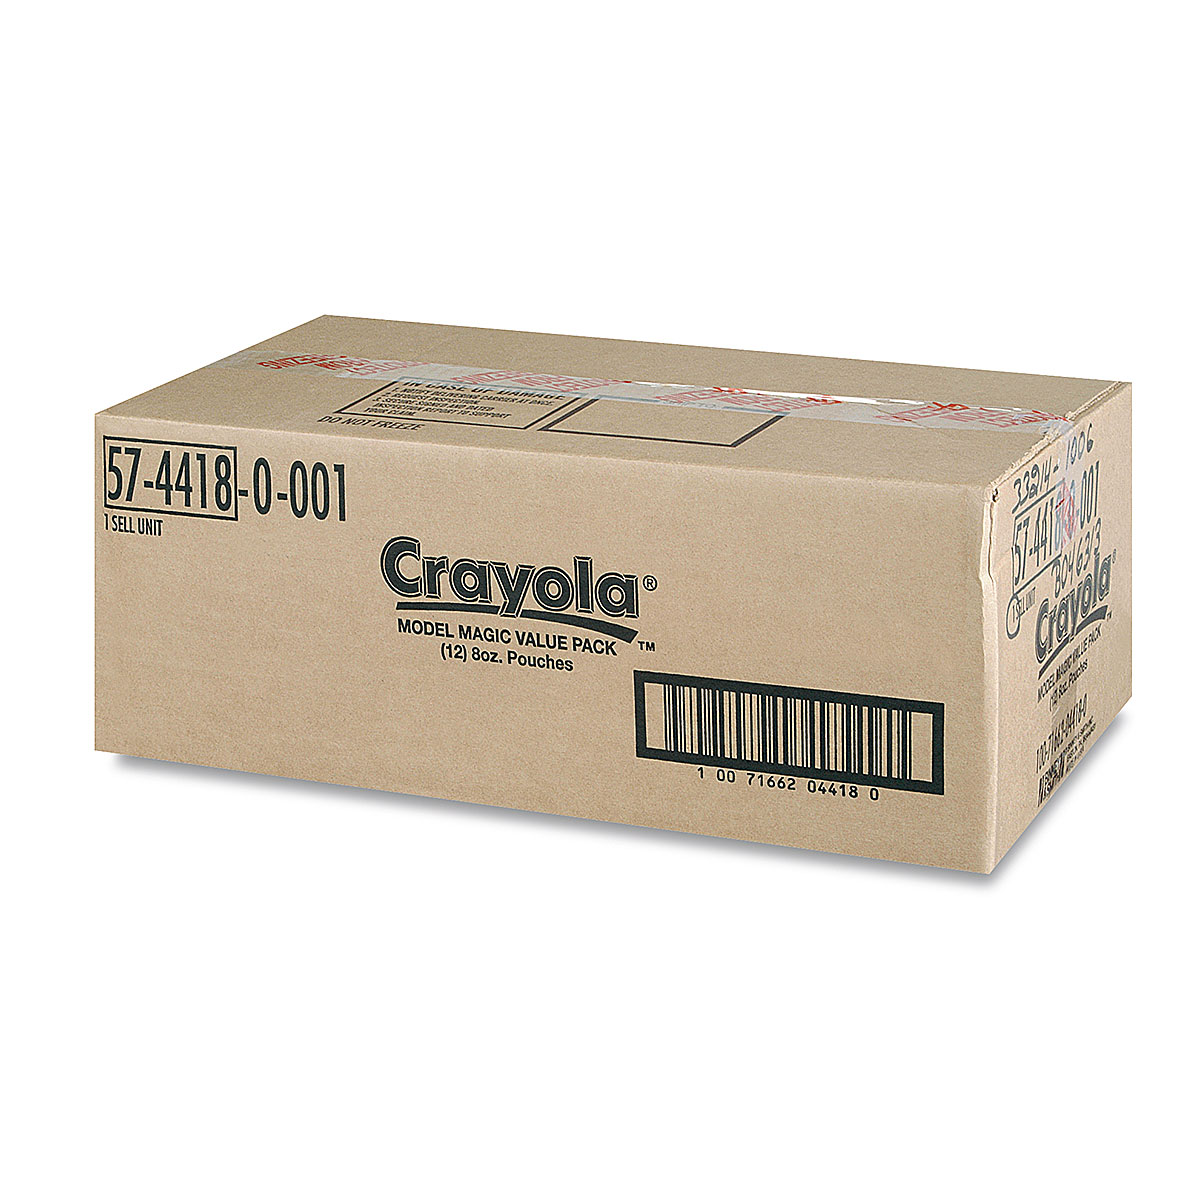 Crayola Model Magic Clay WHITE NEW SEALED LOT 10 X 1 Oz Packs 10 Pack